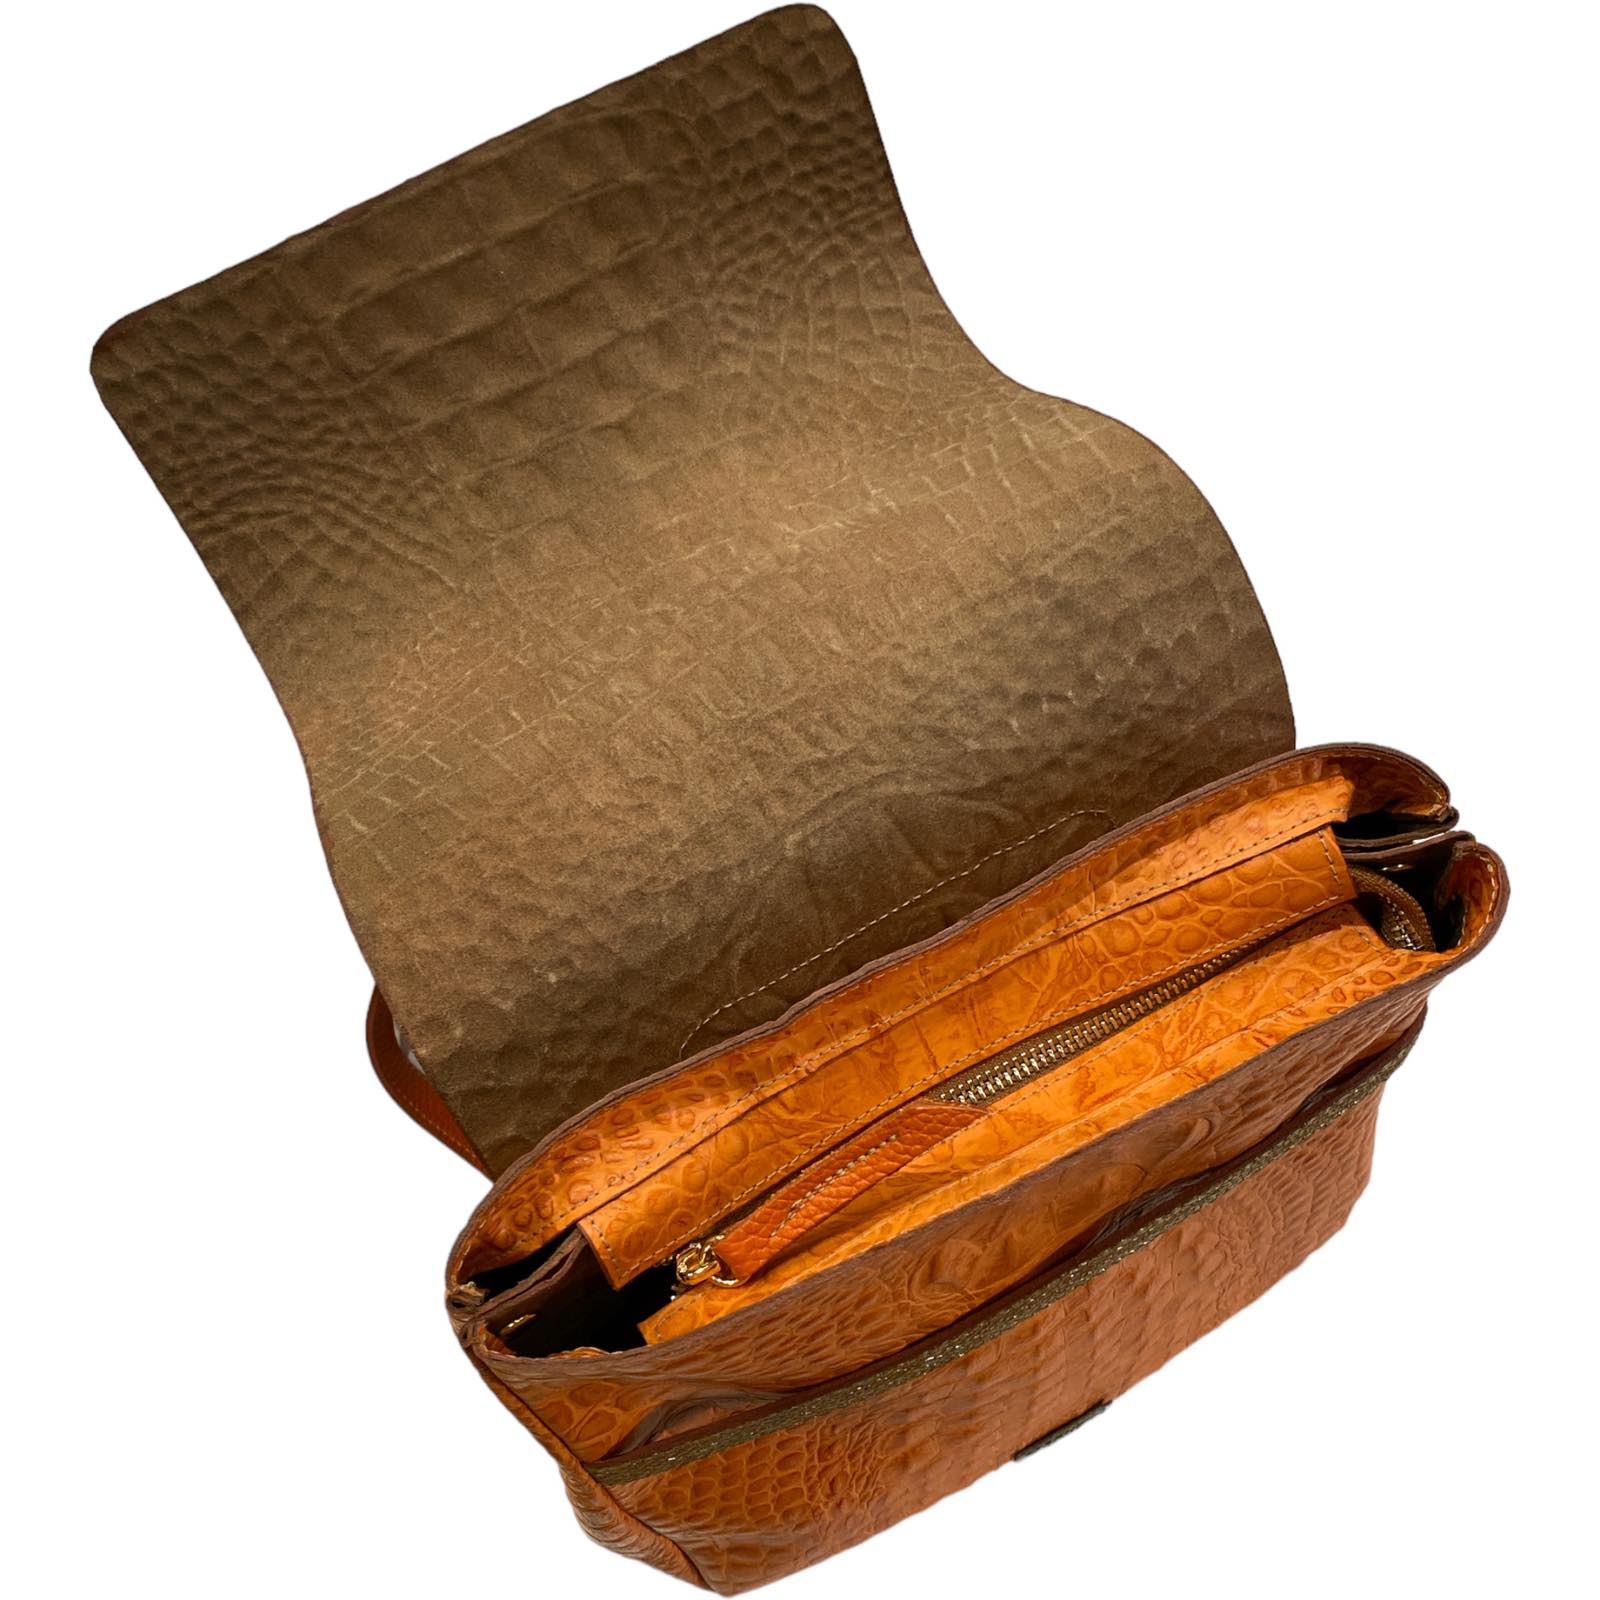 Keira. Aperol alligator-print leather backpack